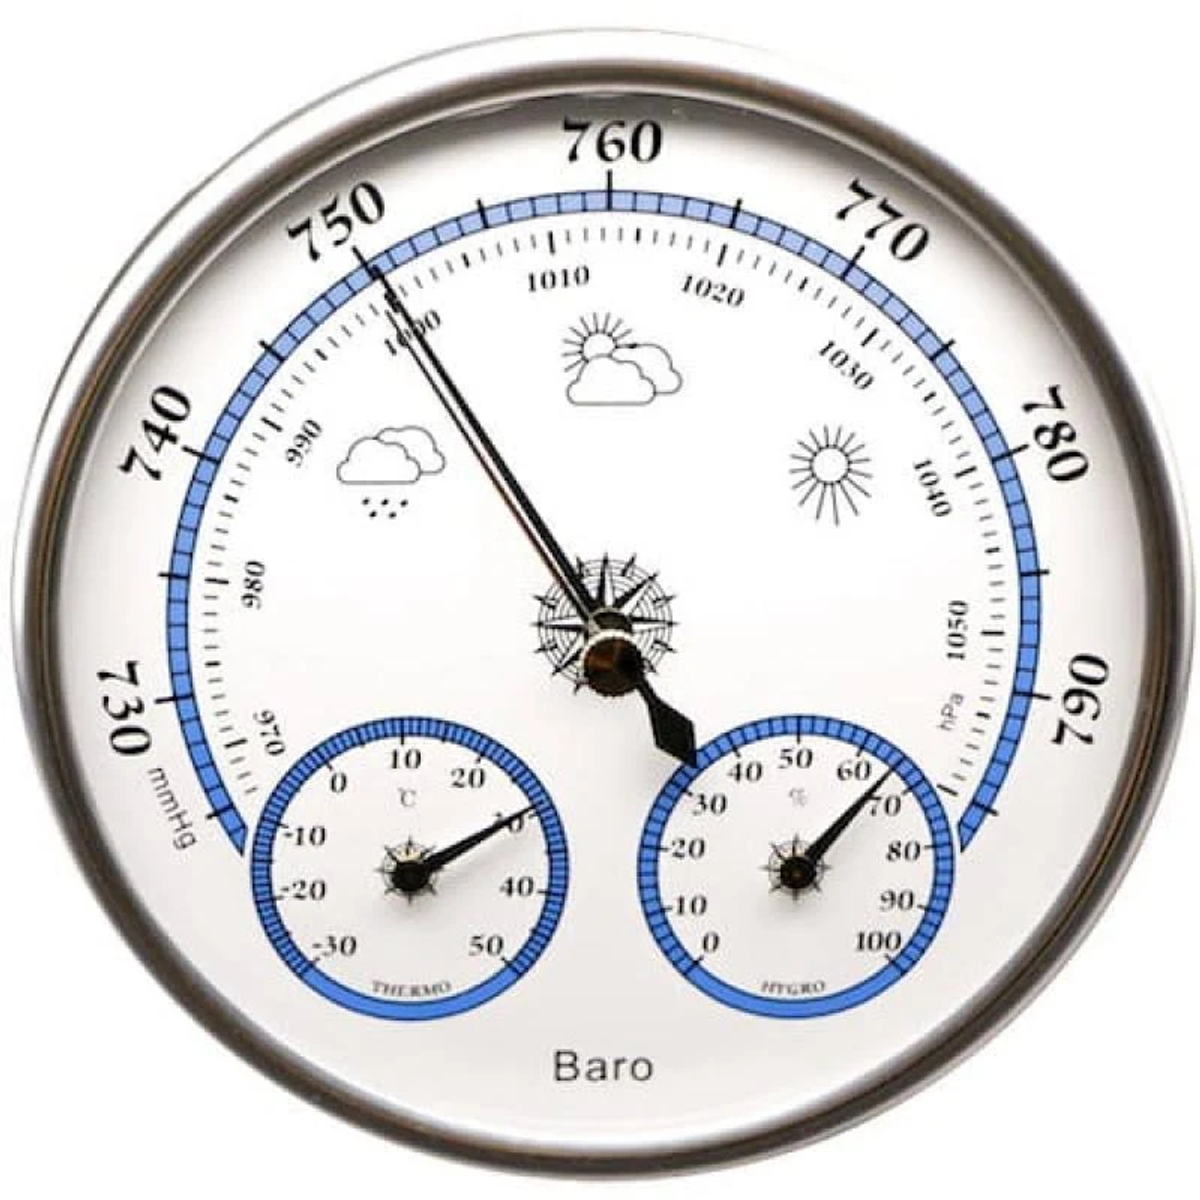 TECHNOLINE WA + Hygrometer 3090 Thermometer